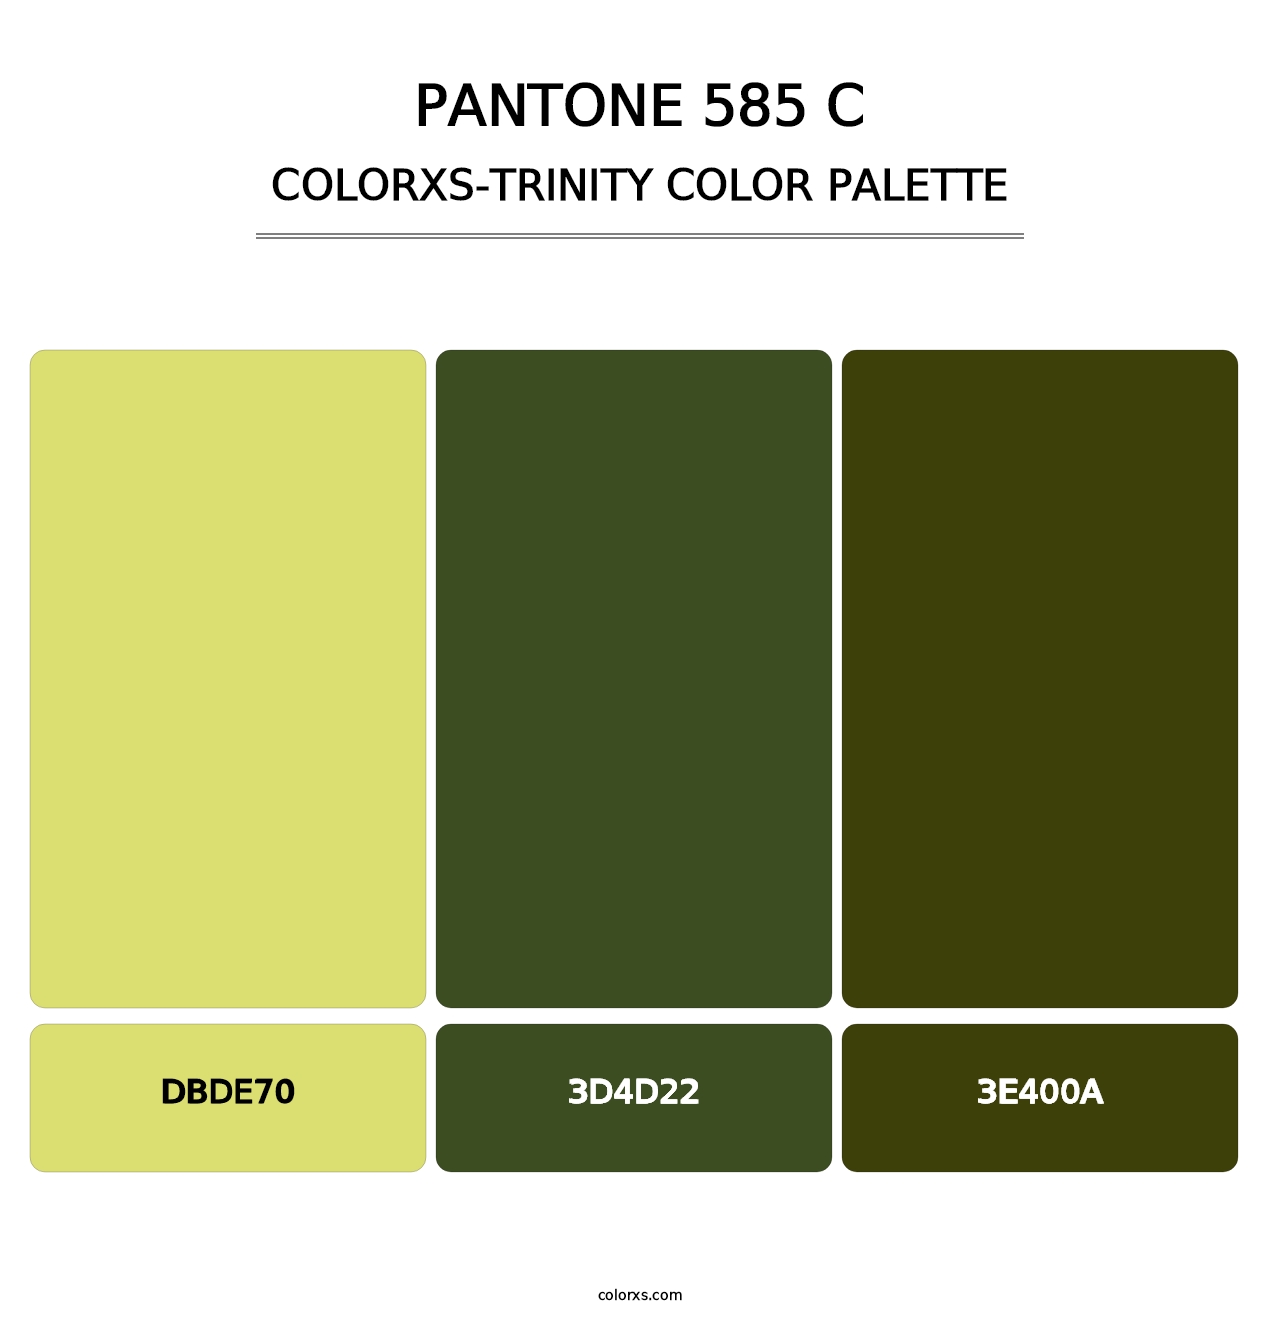 PANTONE 585 C - Colorxs Trinity Palette